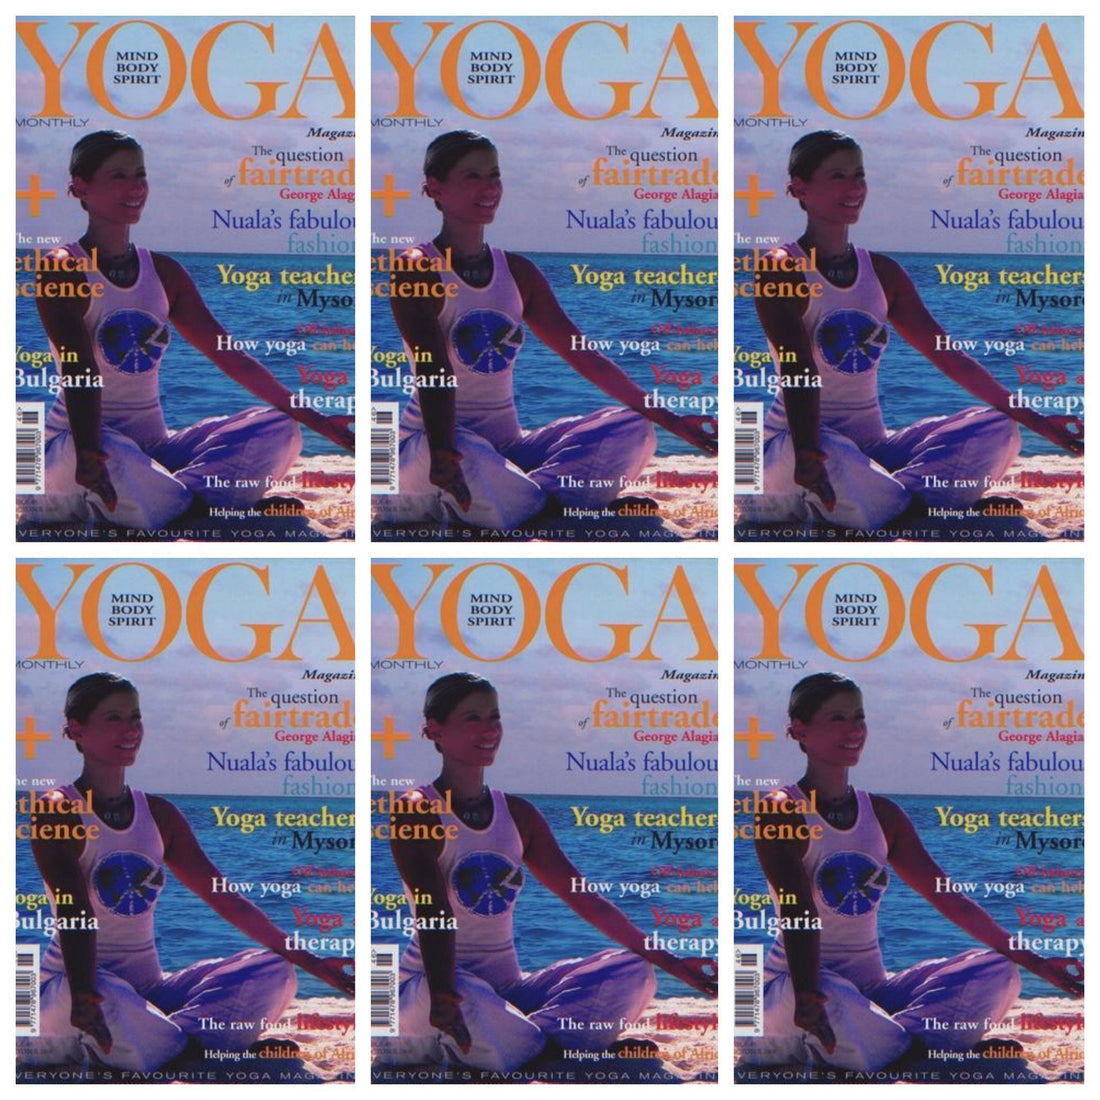 Maya Fiennes in Yoga Magazine Oct 2008